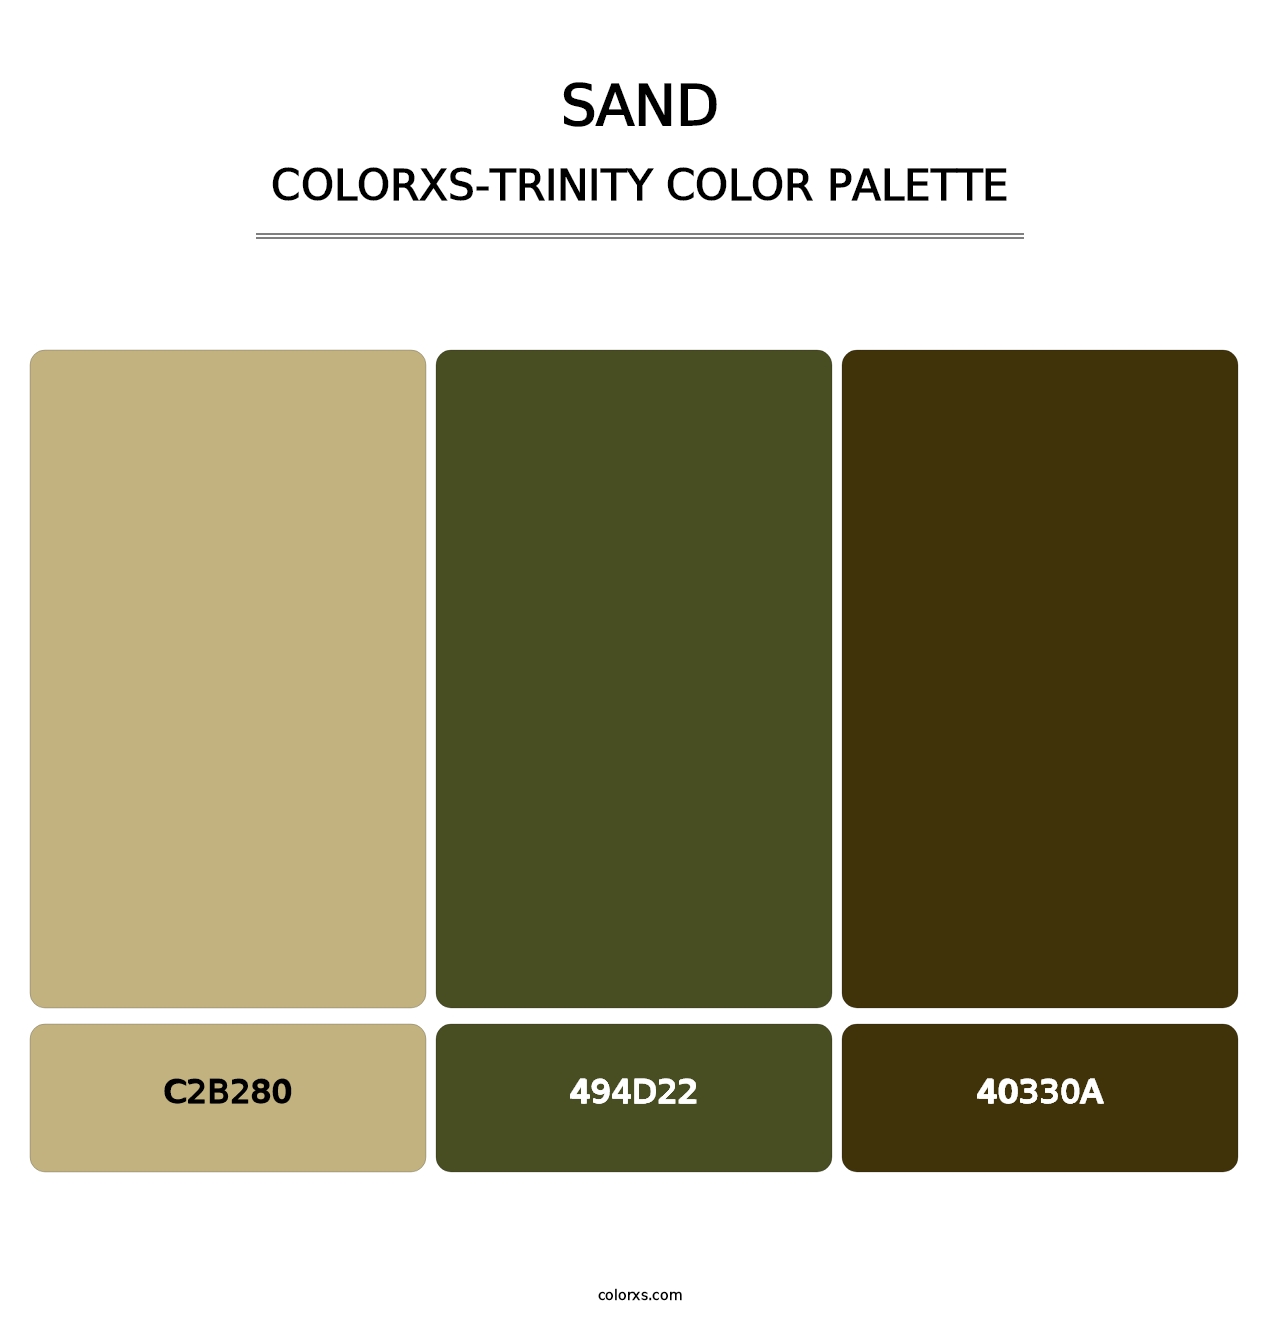 Sand - Colorxs Trinity Palette